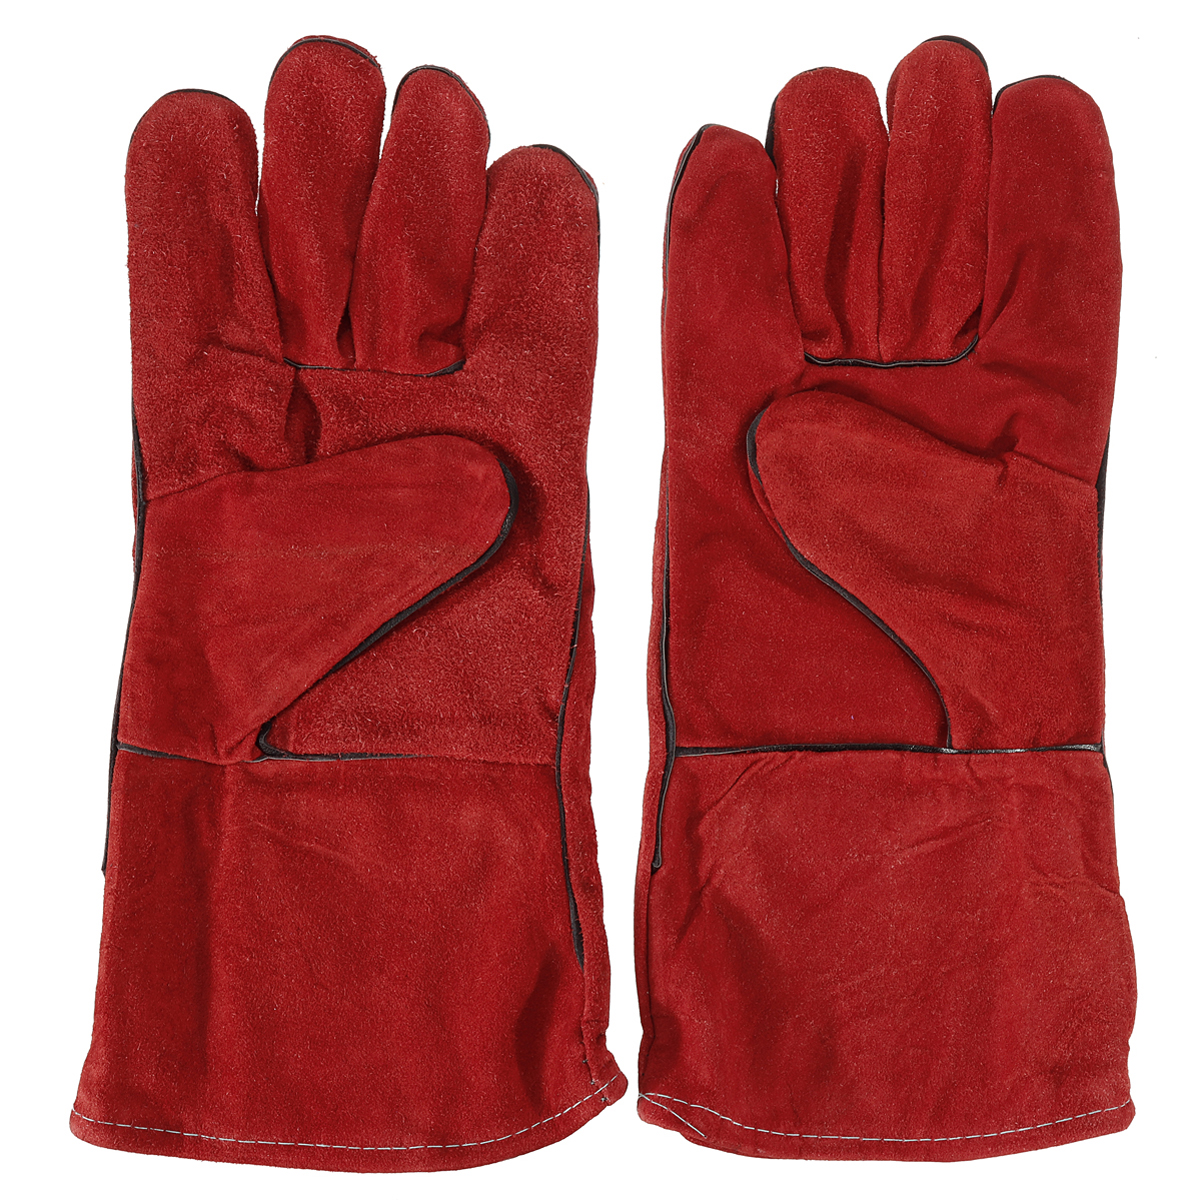 2PCS-14quot-Heavy-Duty-Gardening-Welder-Gloves-Men-Women-Thorn-Proof-Non-Slippery-Leather-Work-1924044-11